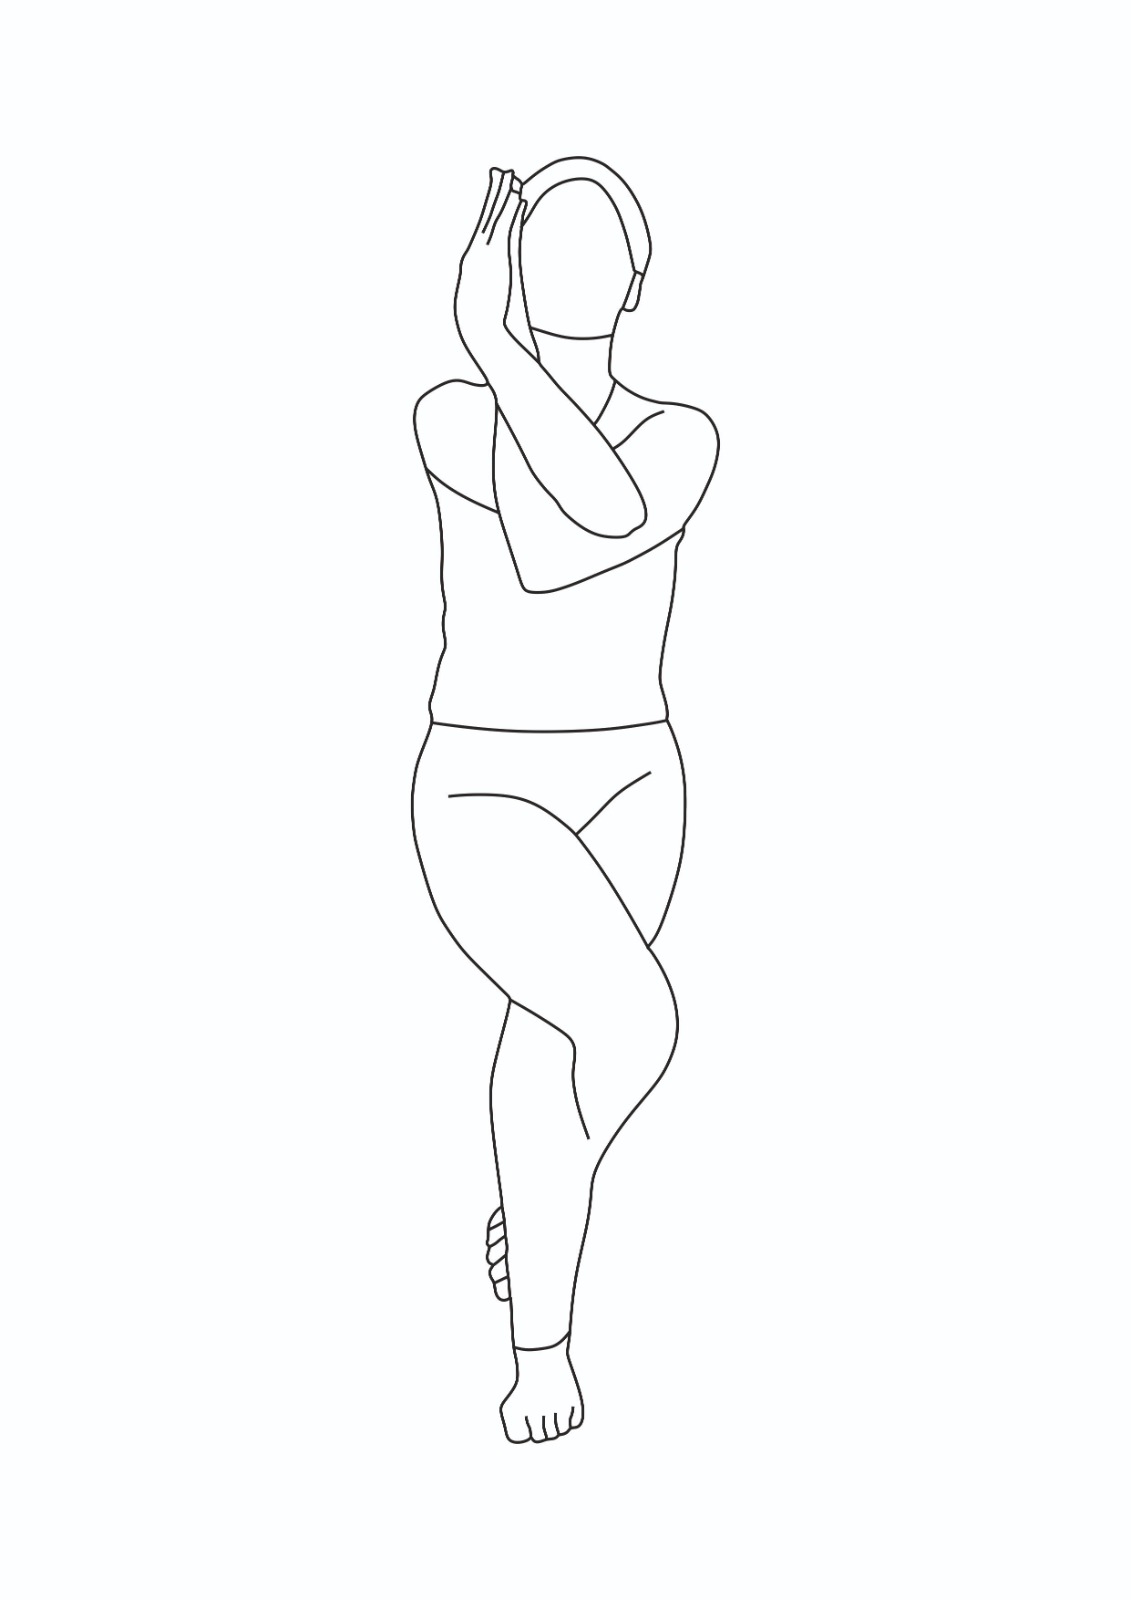 How to Do Eagle Pose - Yoga Tutorial — Alo Moves